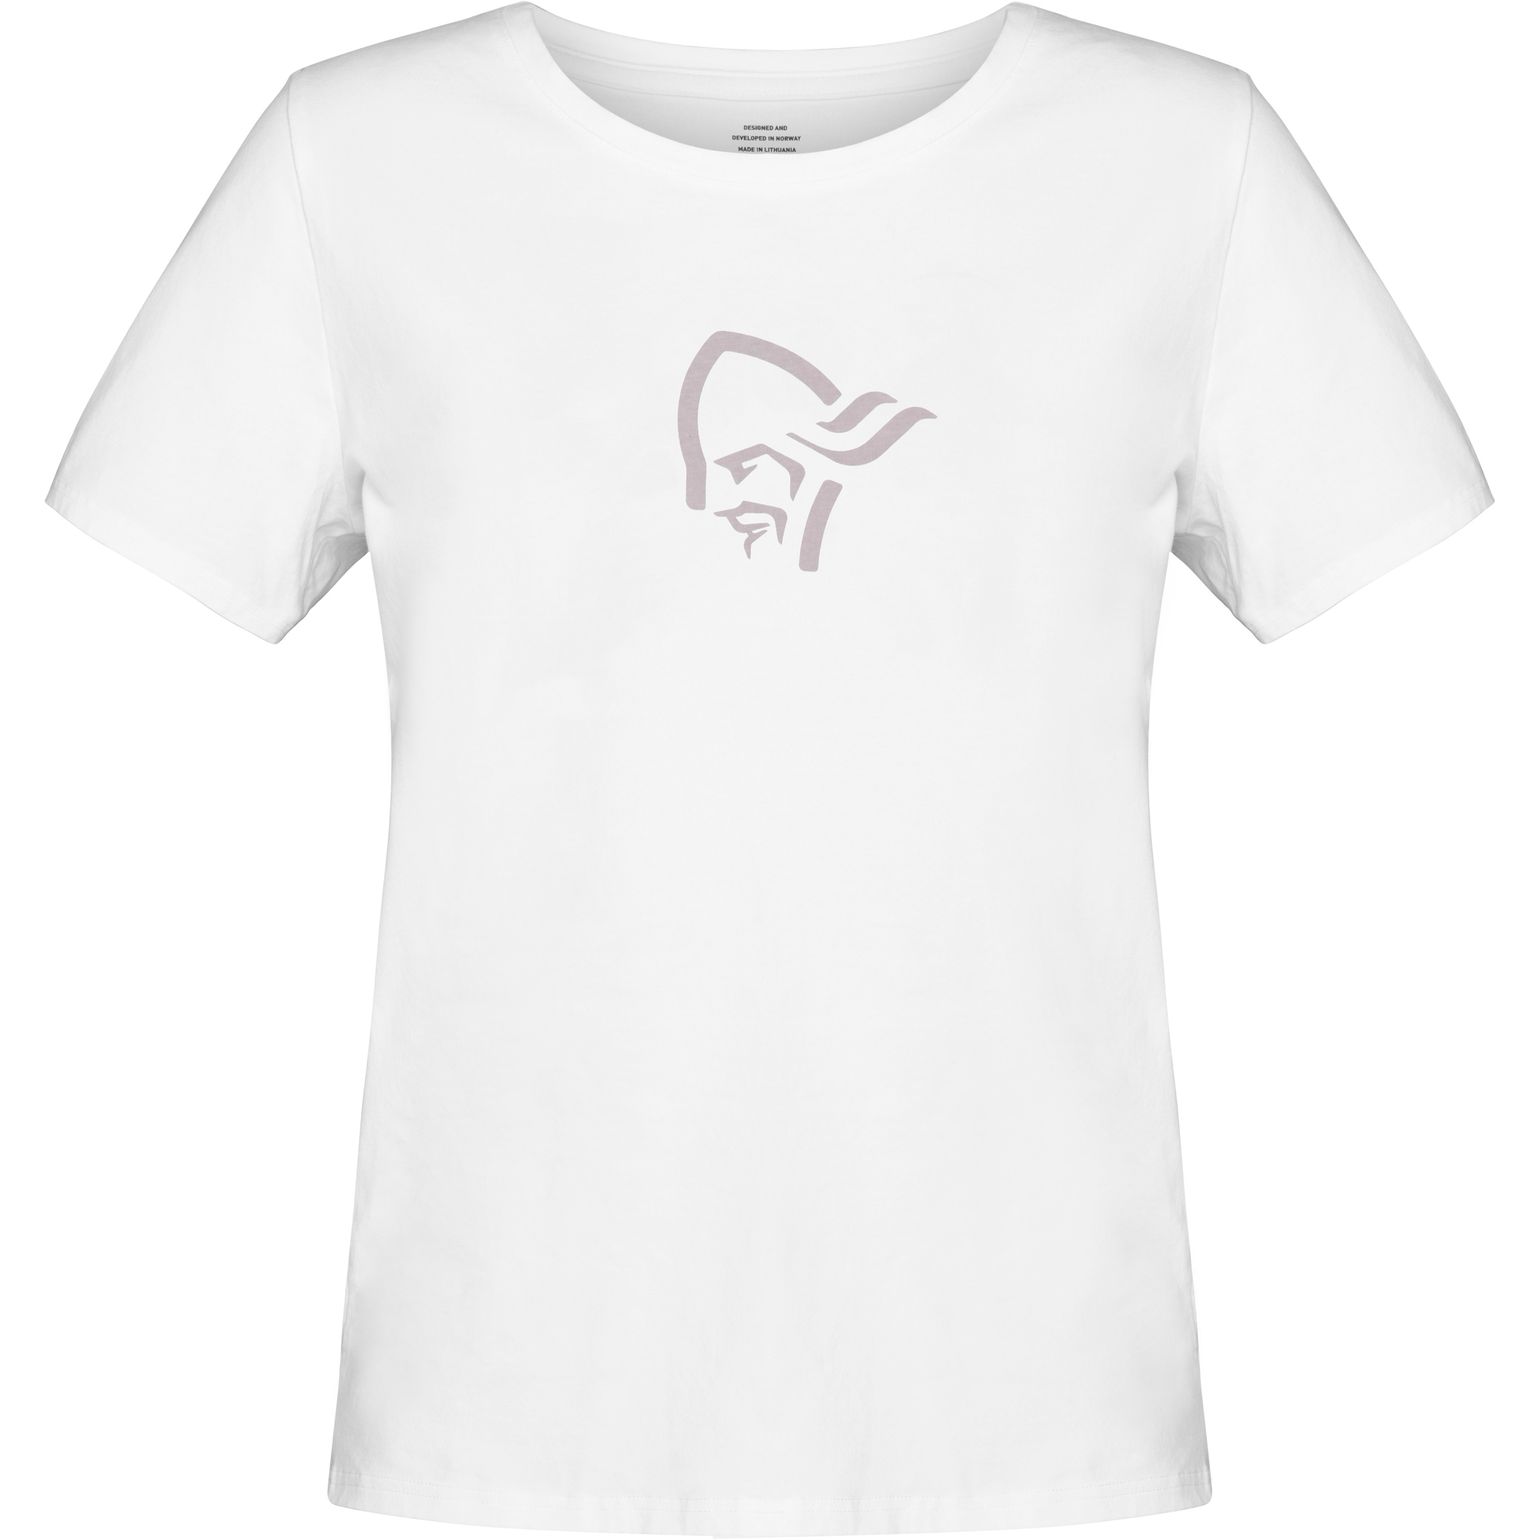 Women's /29 Cotton Viking T-shirt White